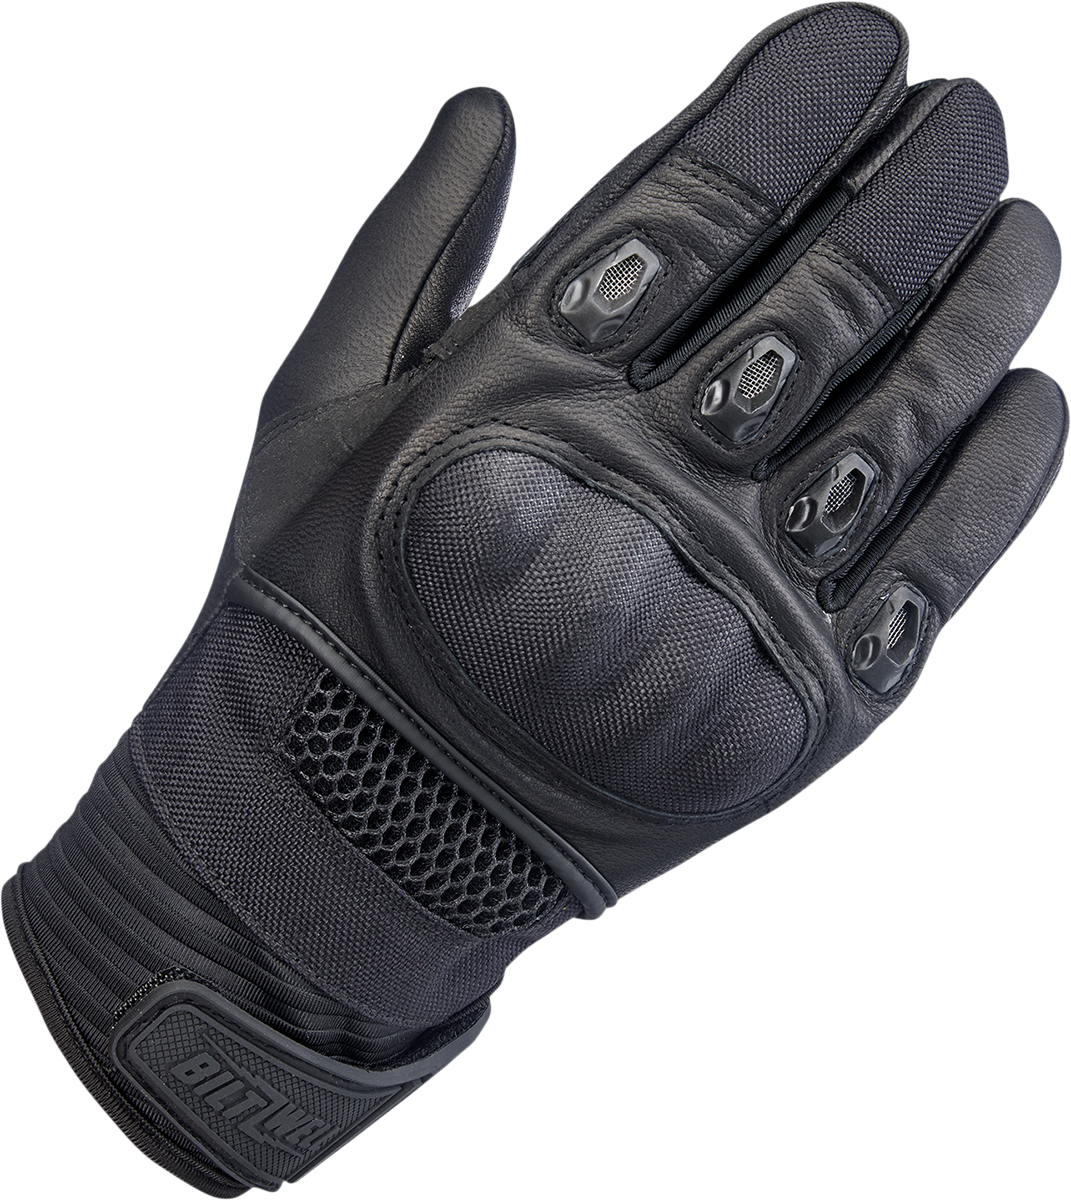 BILTWELL Bridgeport Gloves - Black Out - Medium 1509-0101-303